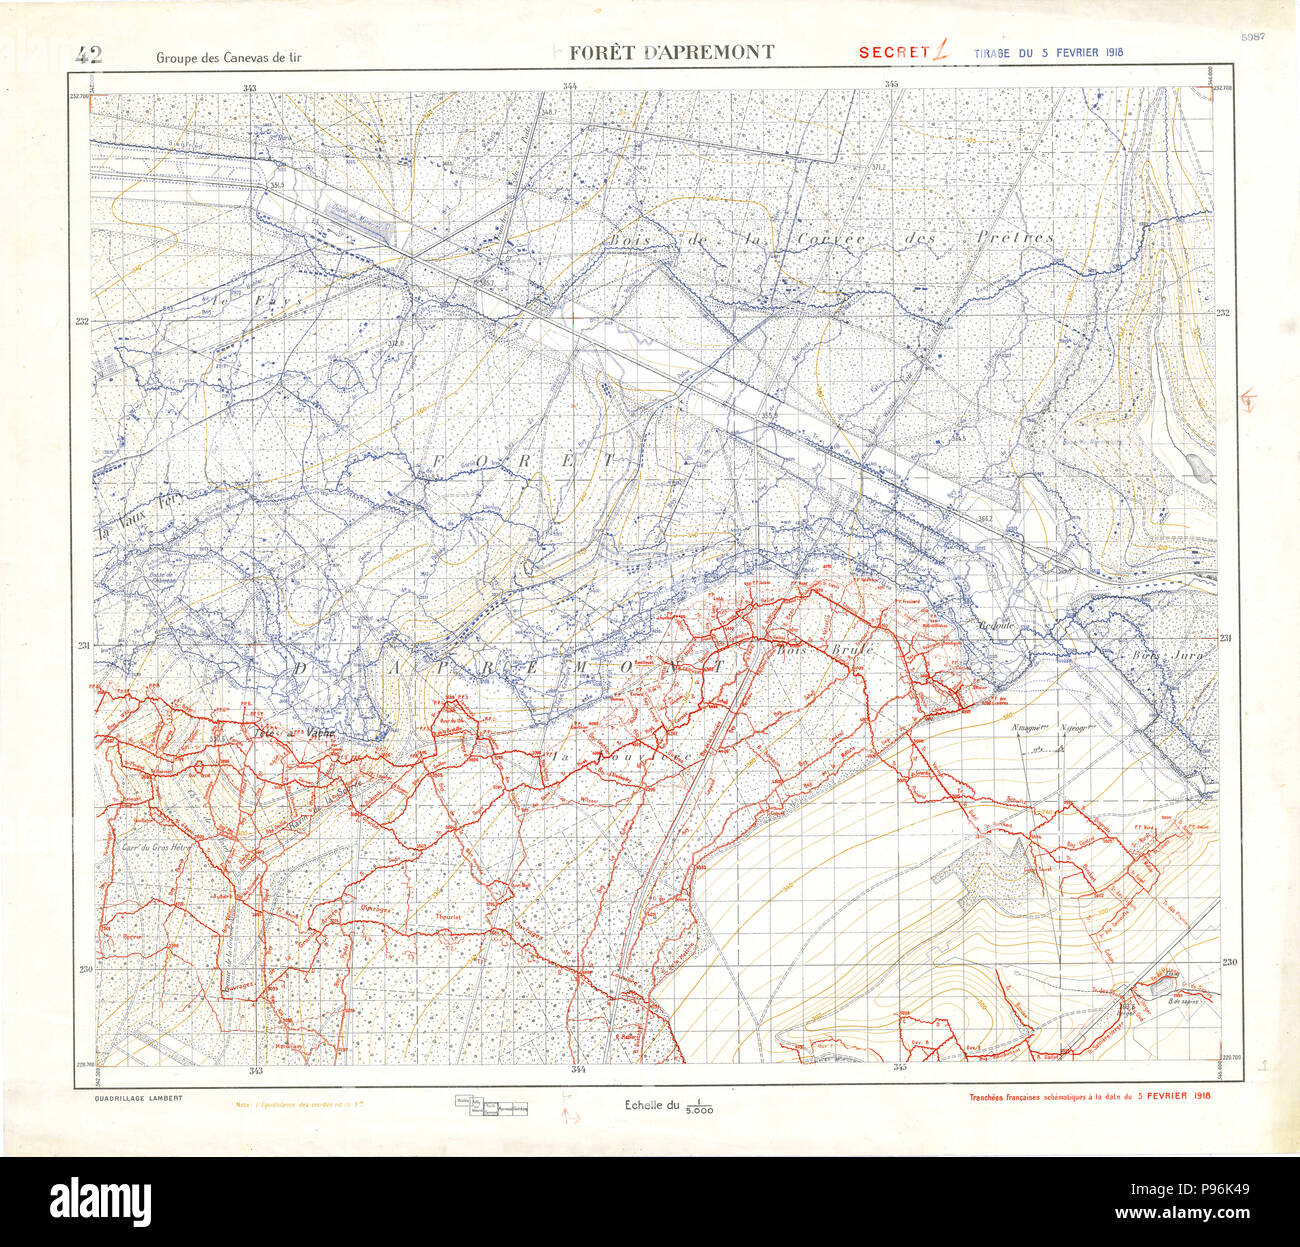 7x5 Photo ww1DB4 World War 1 Maps Map Showing The Battle Falklands 00 1 5 